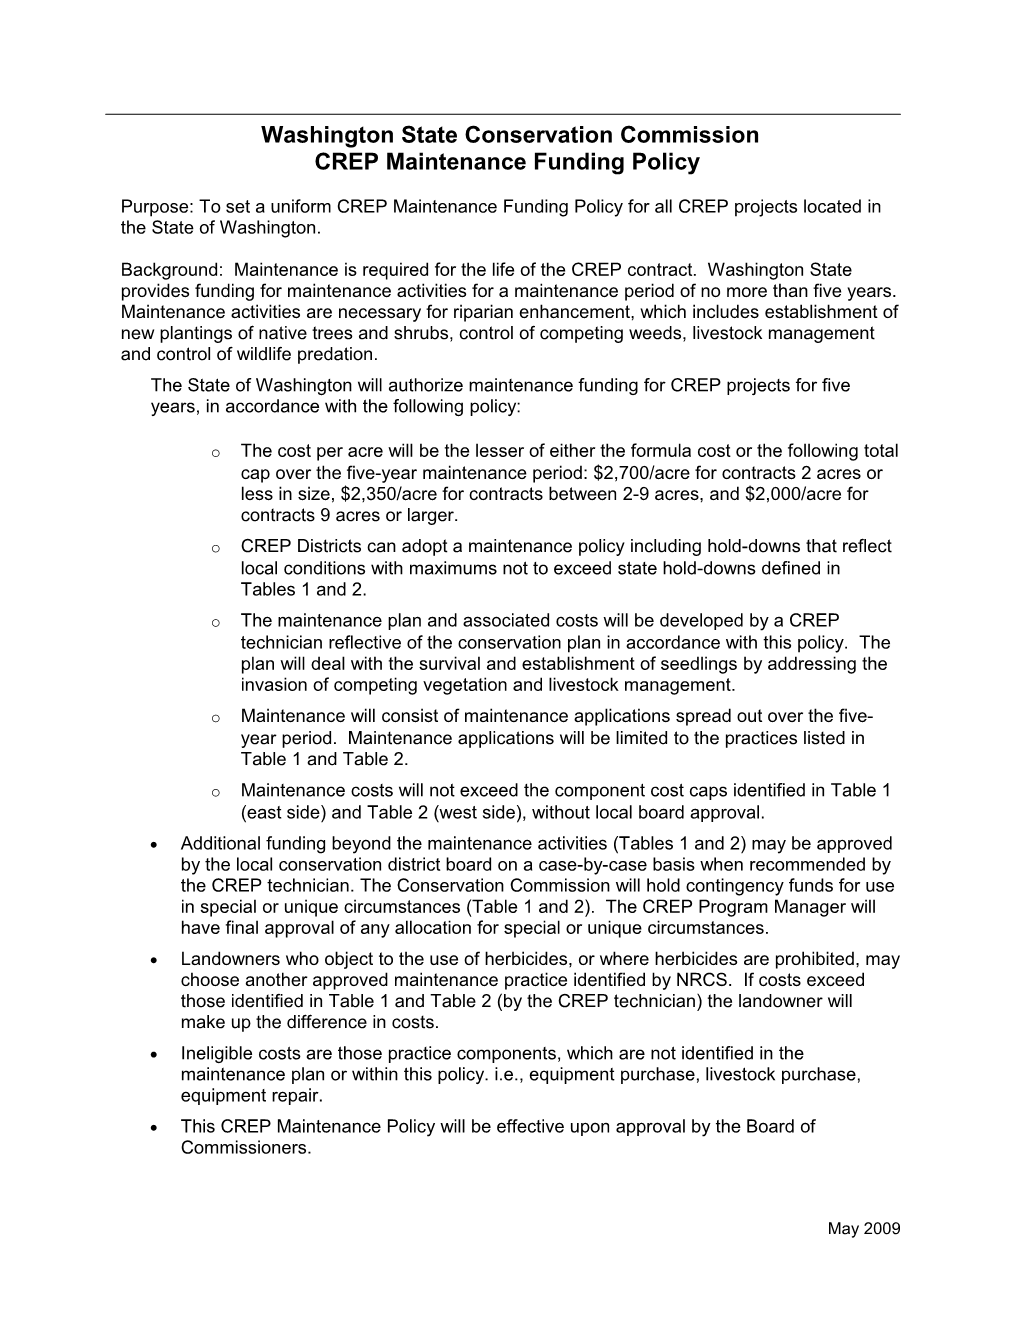 Washington State CREP Maintenance Funding Policy